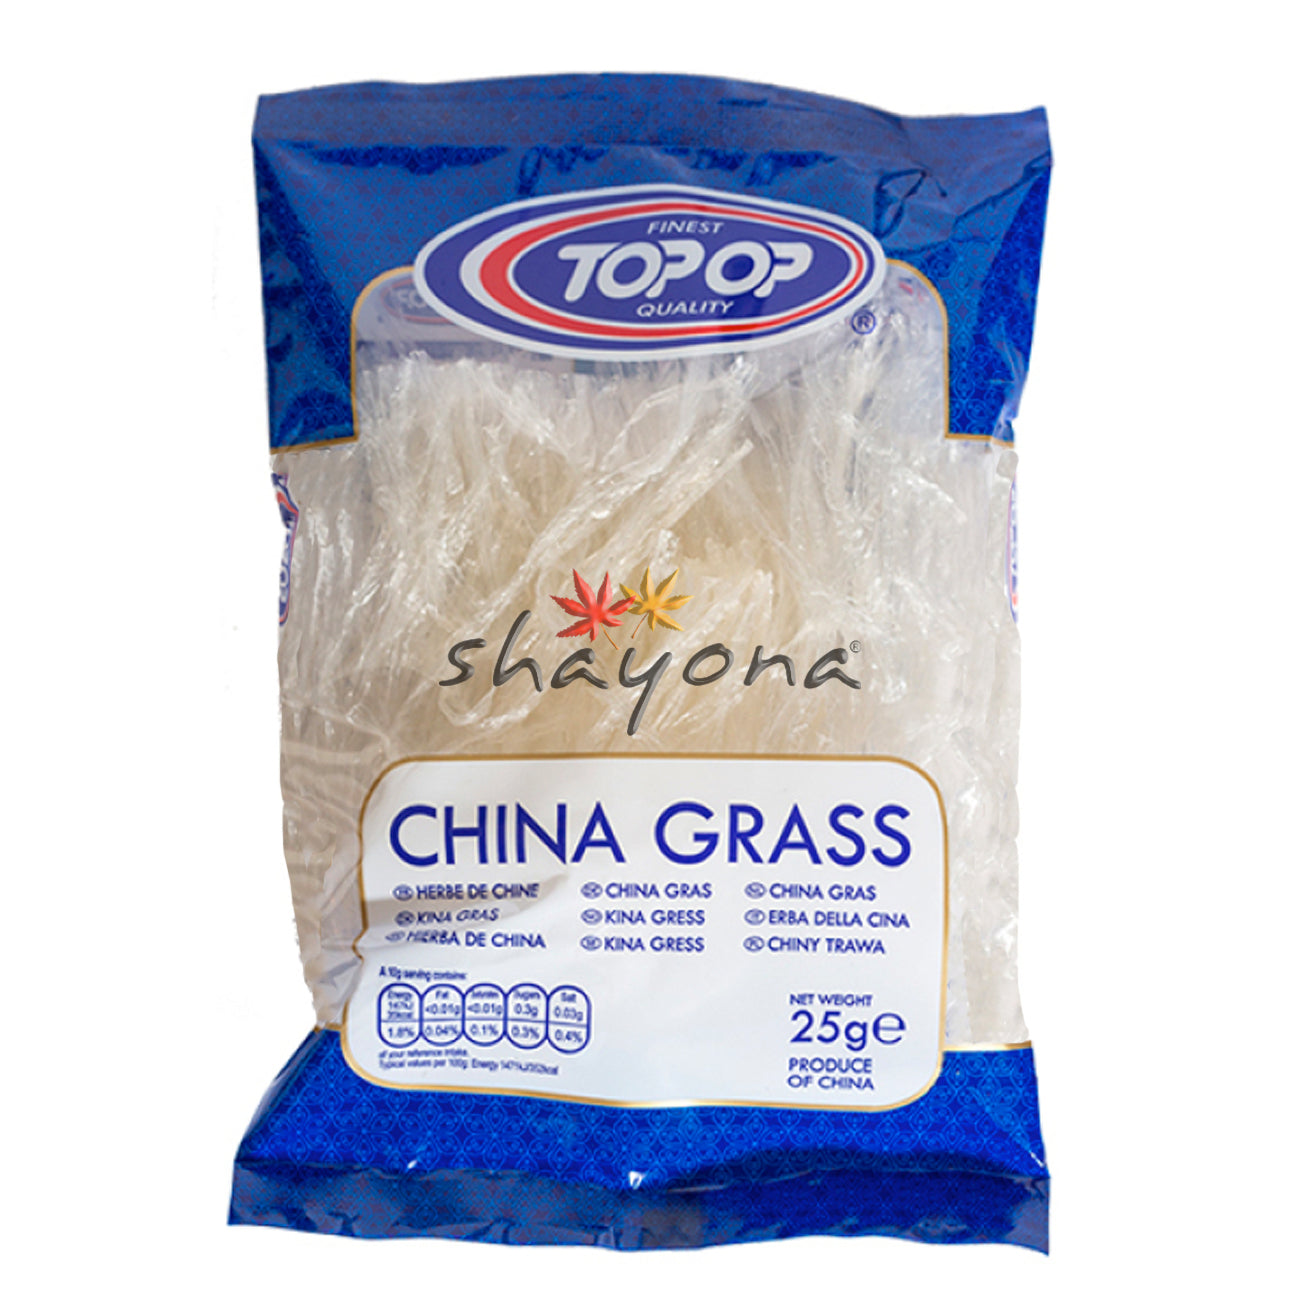 TopOp China Grass